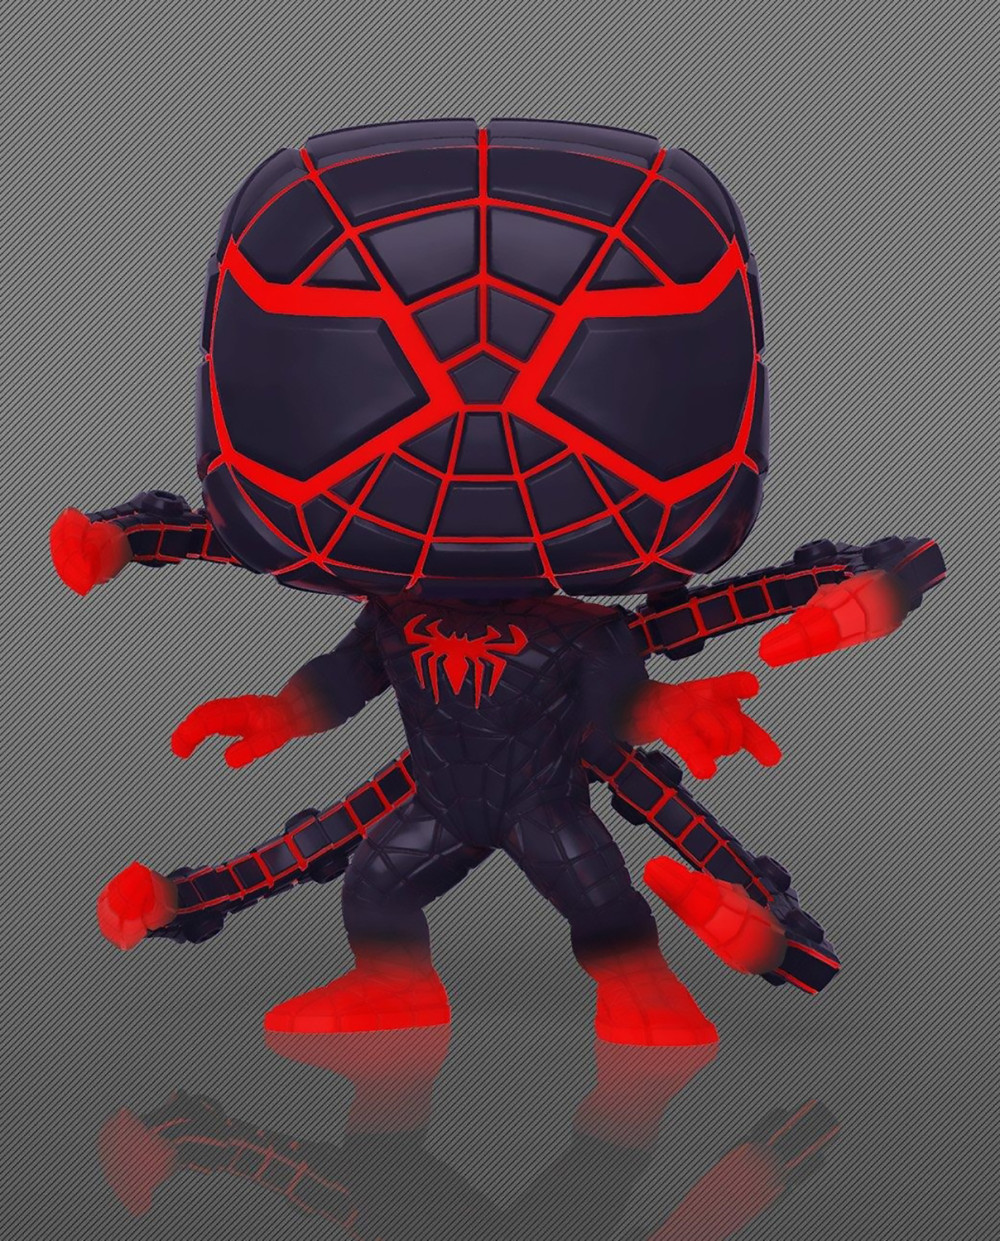  Funko POP: Marvel Spider-Man Gamerverse  Miles Morales Programmable Matter Suit Glows In The Dark Bobble-Head (9,5 )